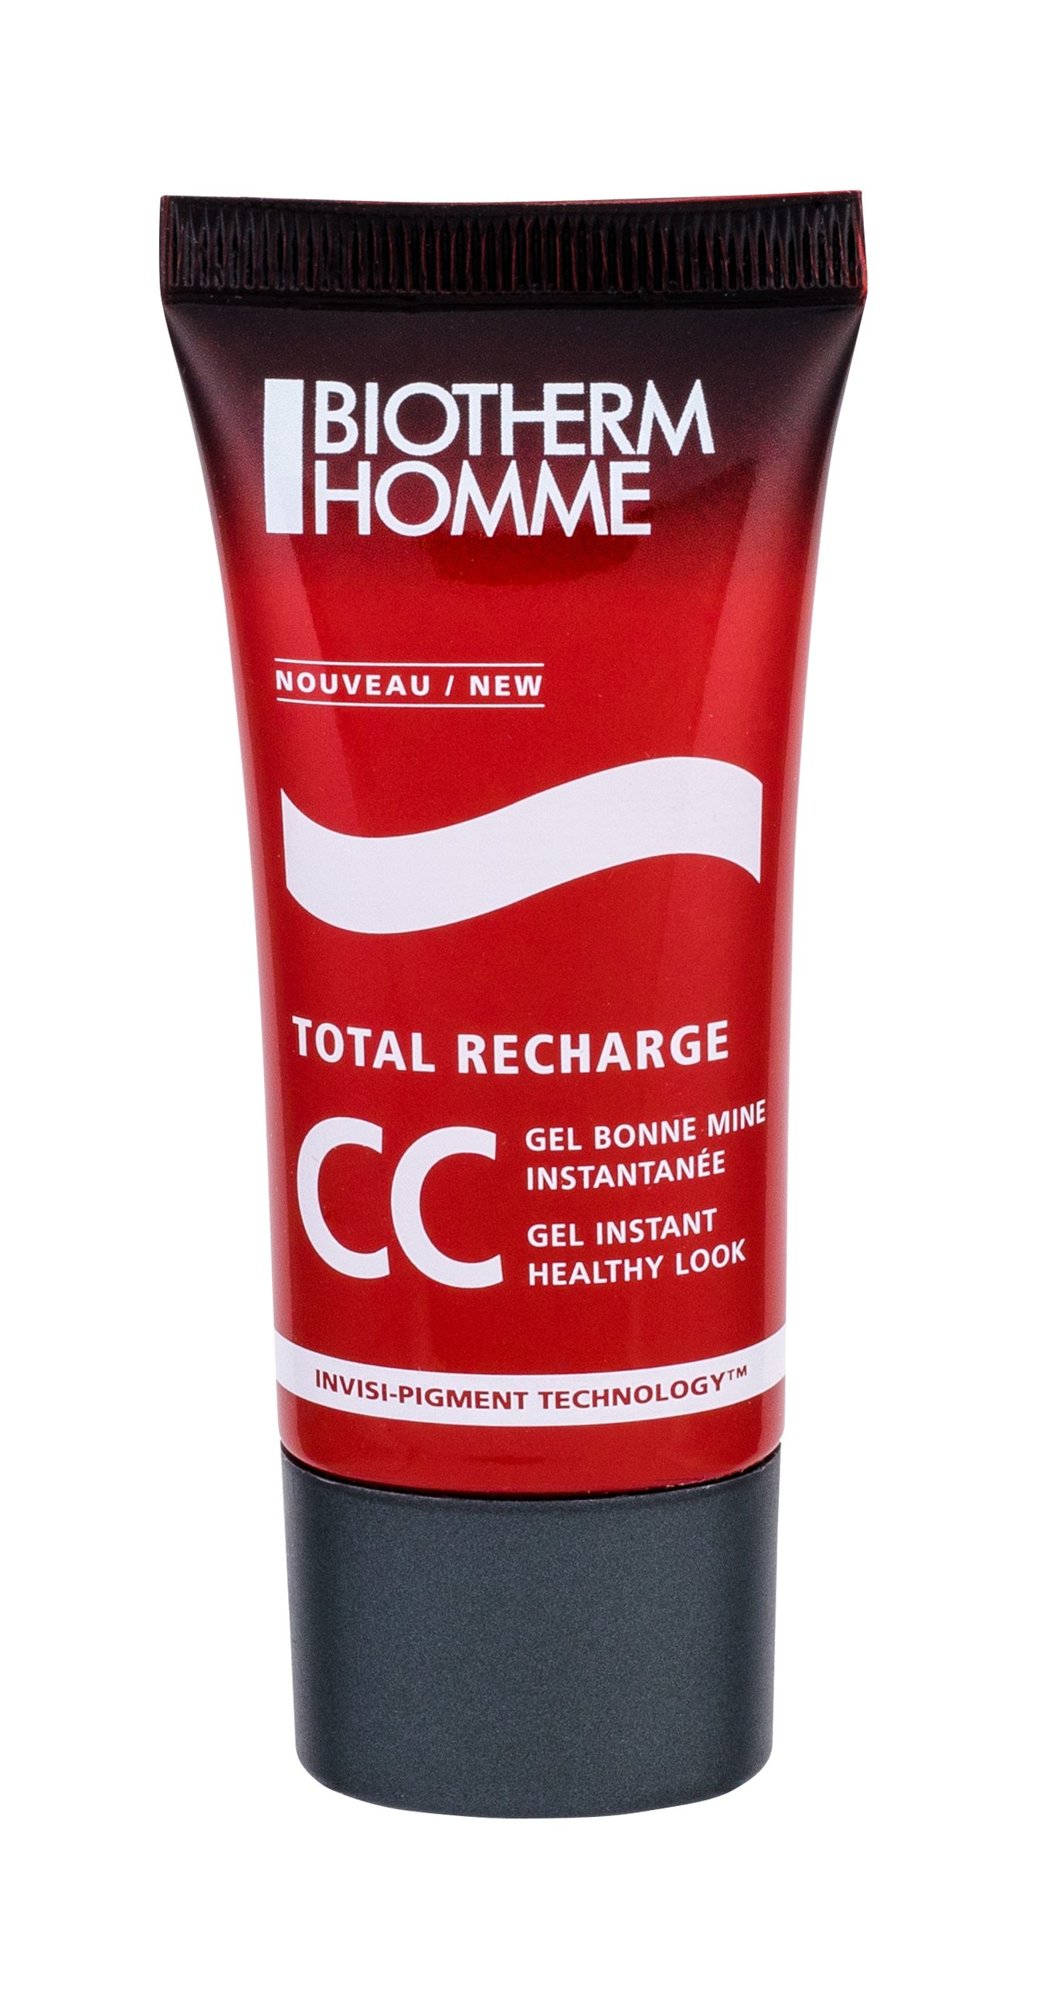 Biotherm Homme Total Recharge CC kremas